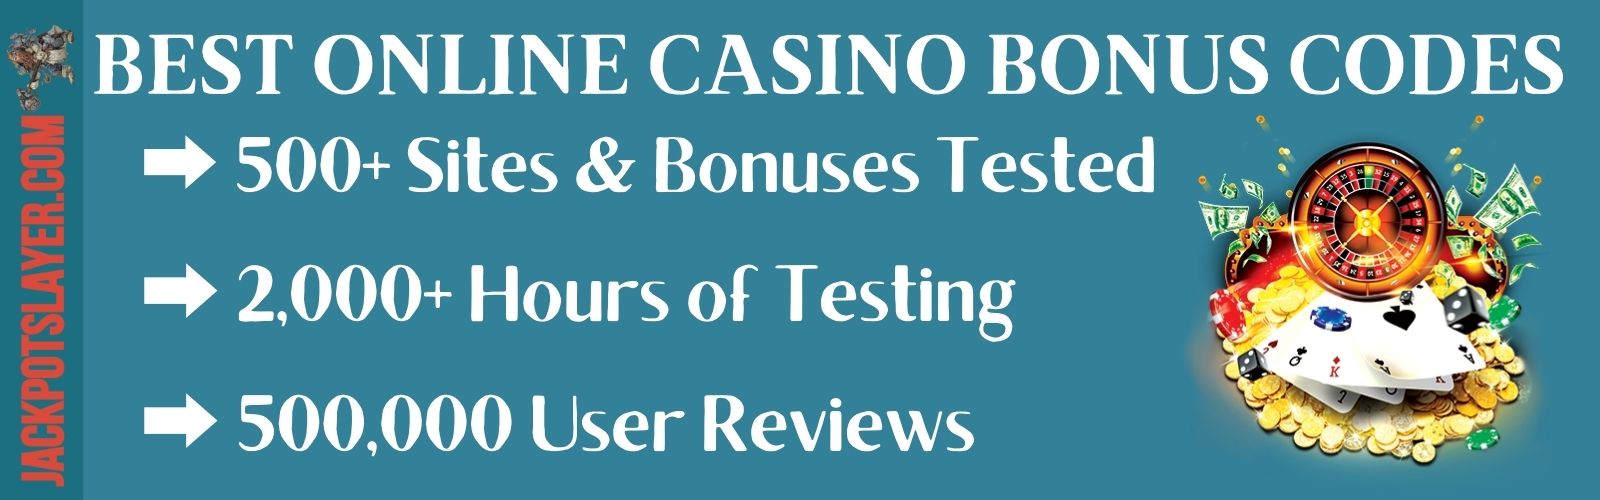 Best Online Casino Bonus Code